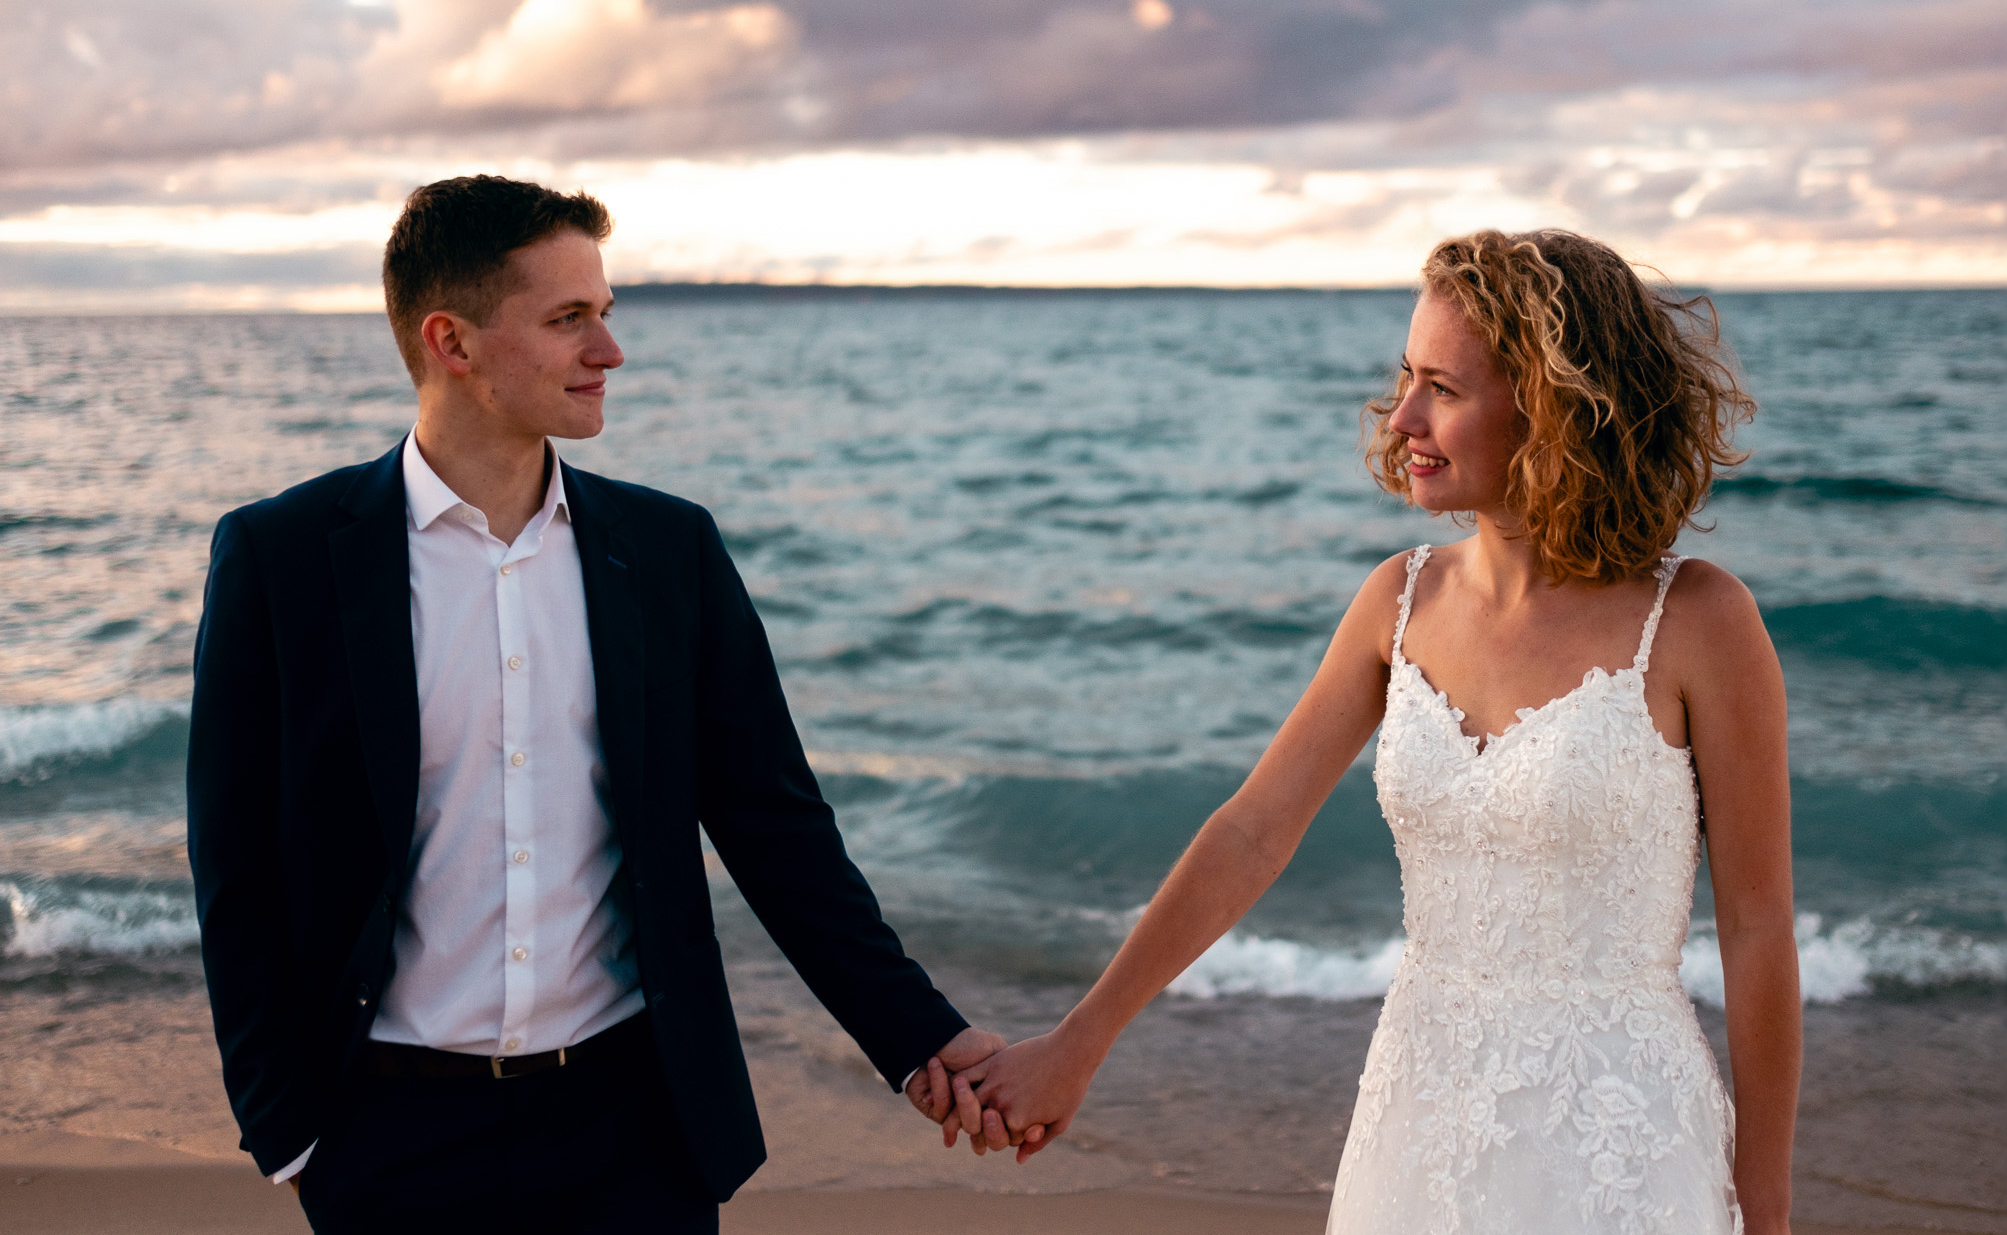 Josh and Siena by Lake Michigan in their wedding attire.